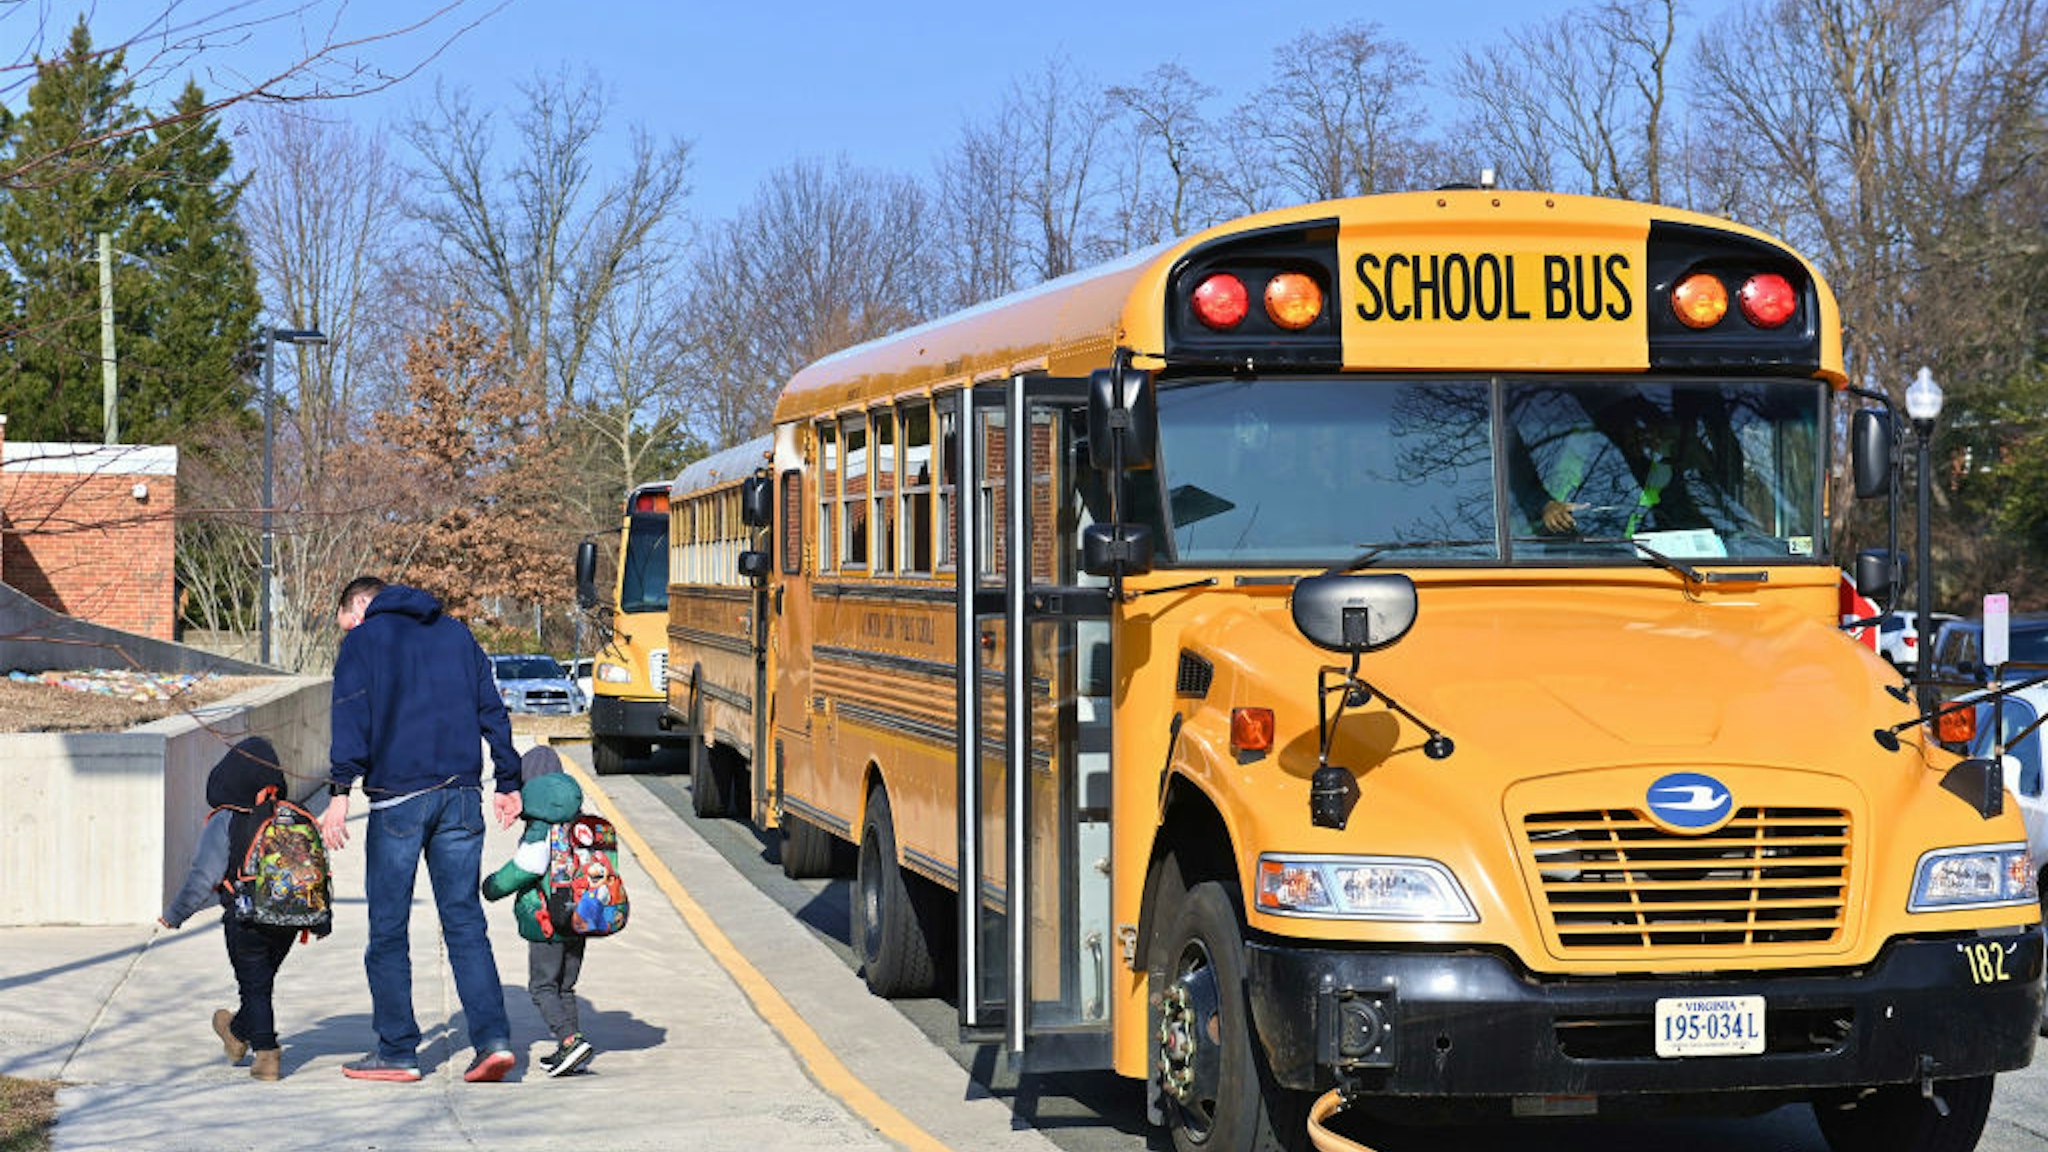 ARLINGTON, VA - MARCH 04: A school bus arrives at Ashlawn elementary school on March 4, 2021 in Arlington, VA. Ashlawn elementary school reopens on Thursday in Arlington.